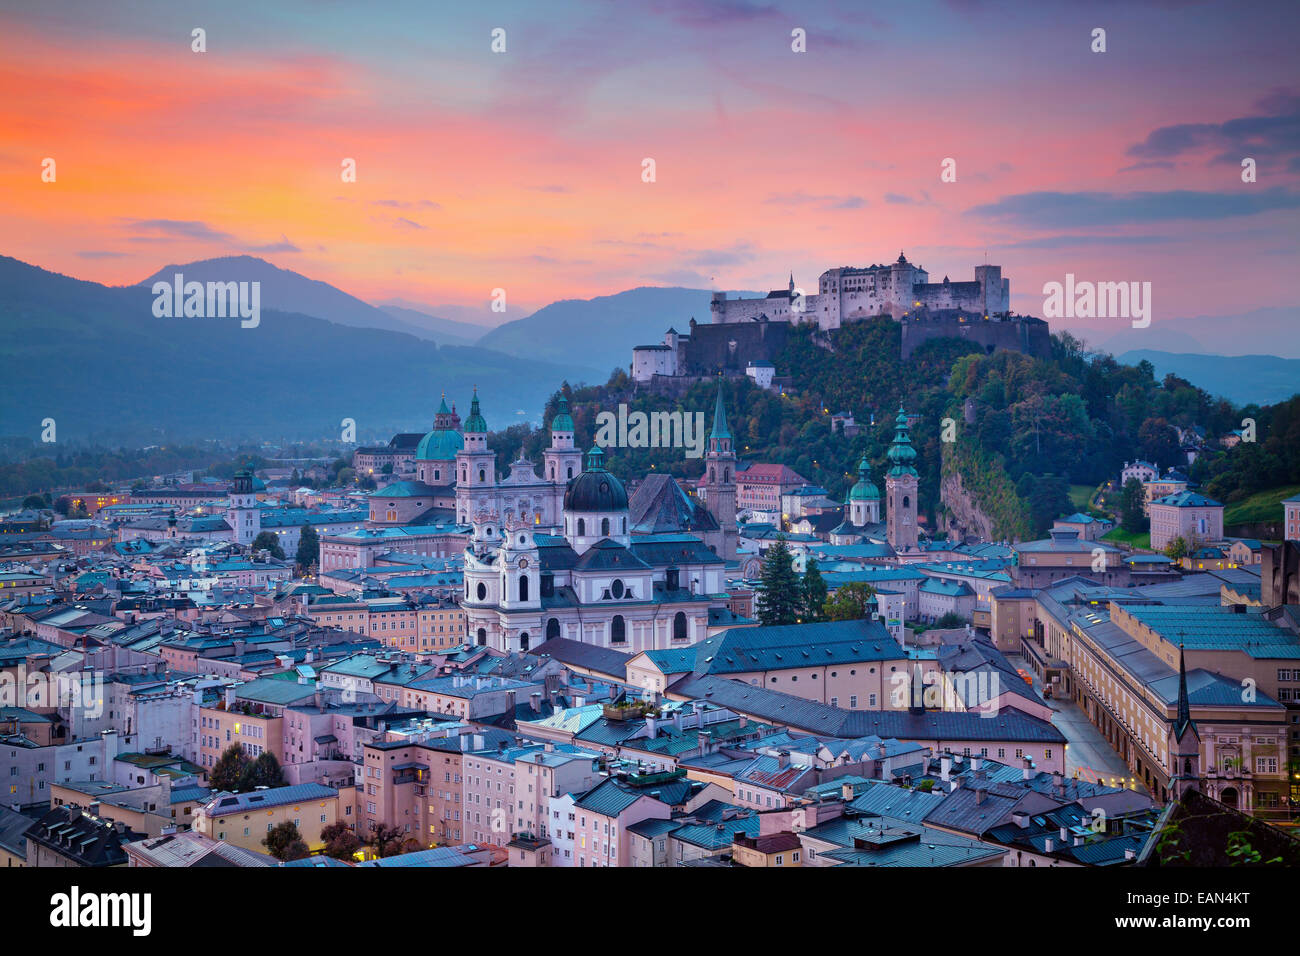 Salzburg, Austria. Image of the Salzburg during autumn sunrise. Stock Photo